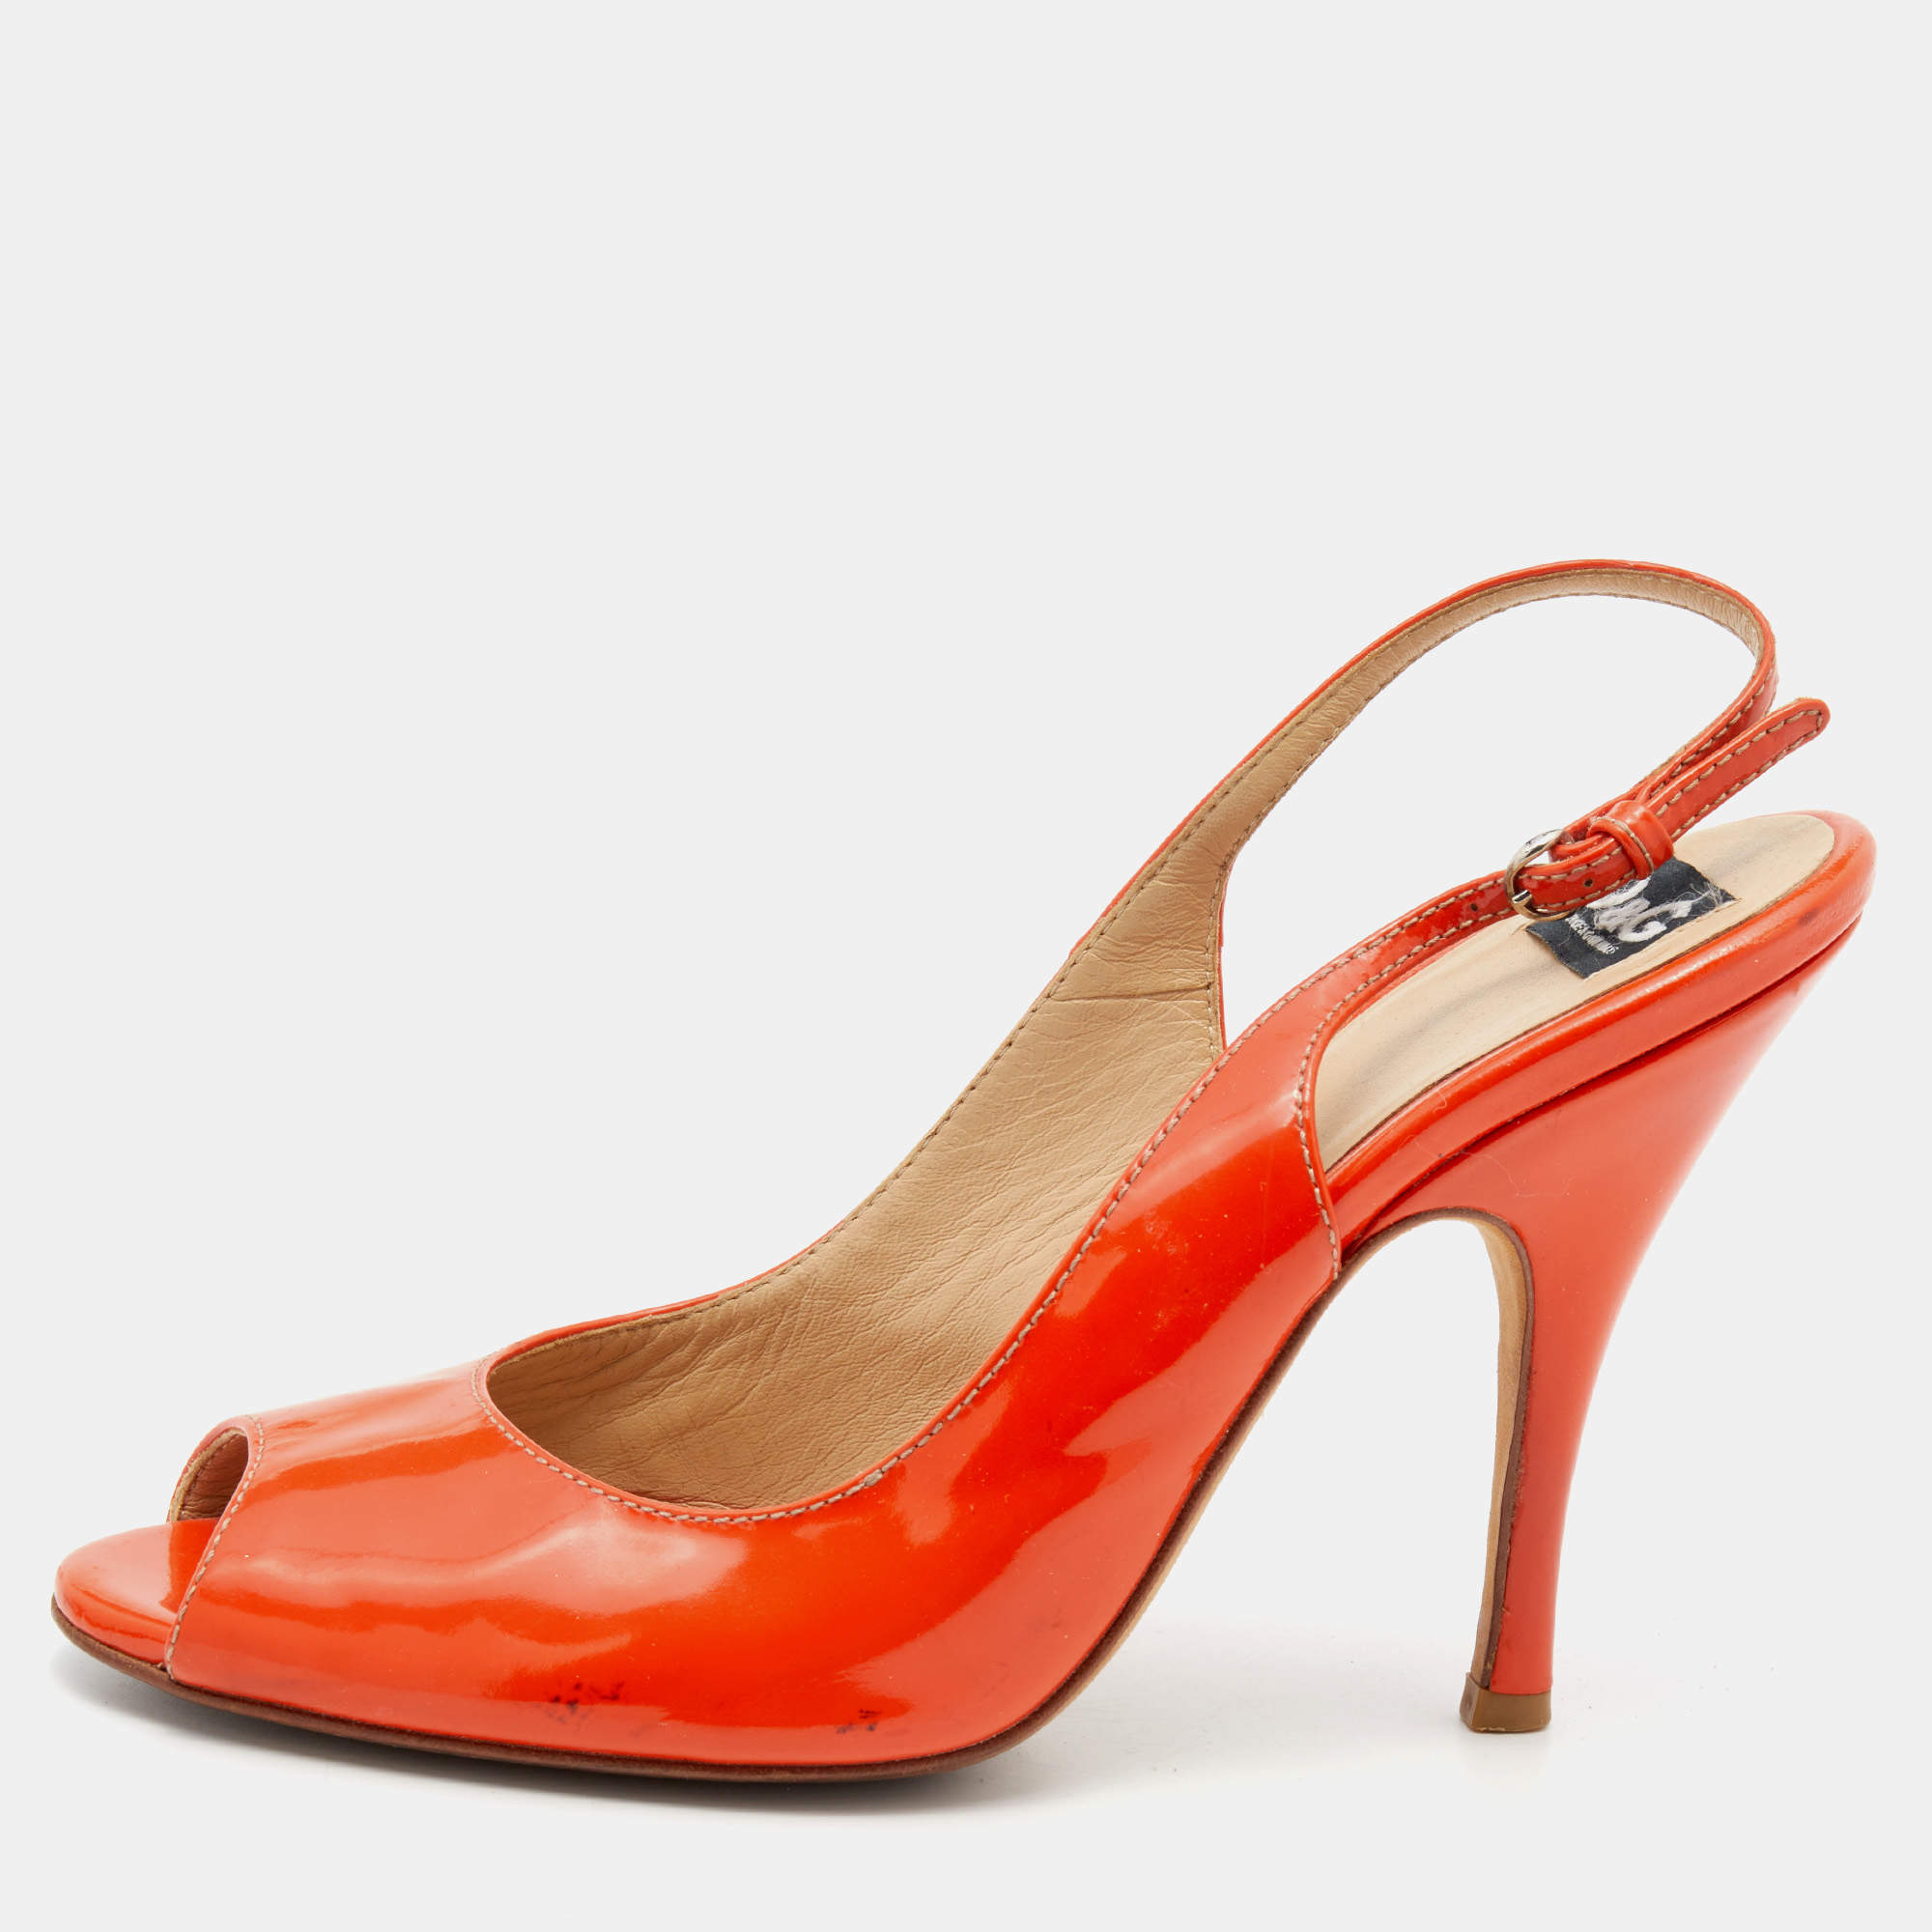 D&G Orange Patent Leather Peep Toe Slingback Sandals Size 37